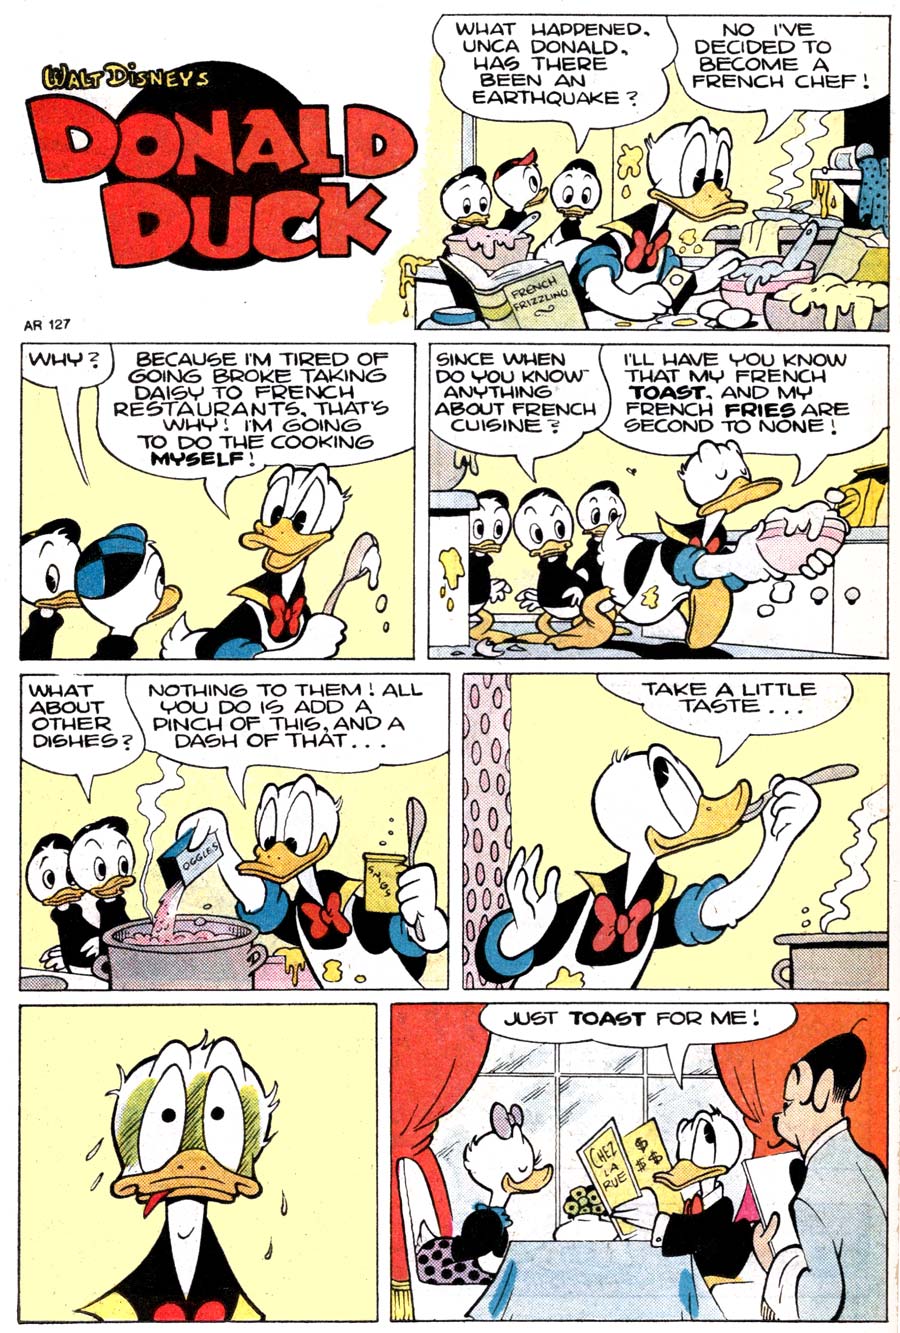 donald duck comic strip girlfriend Adult Pictures